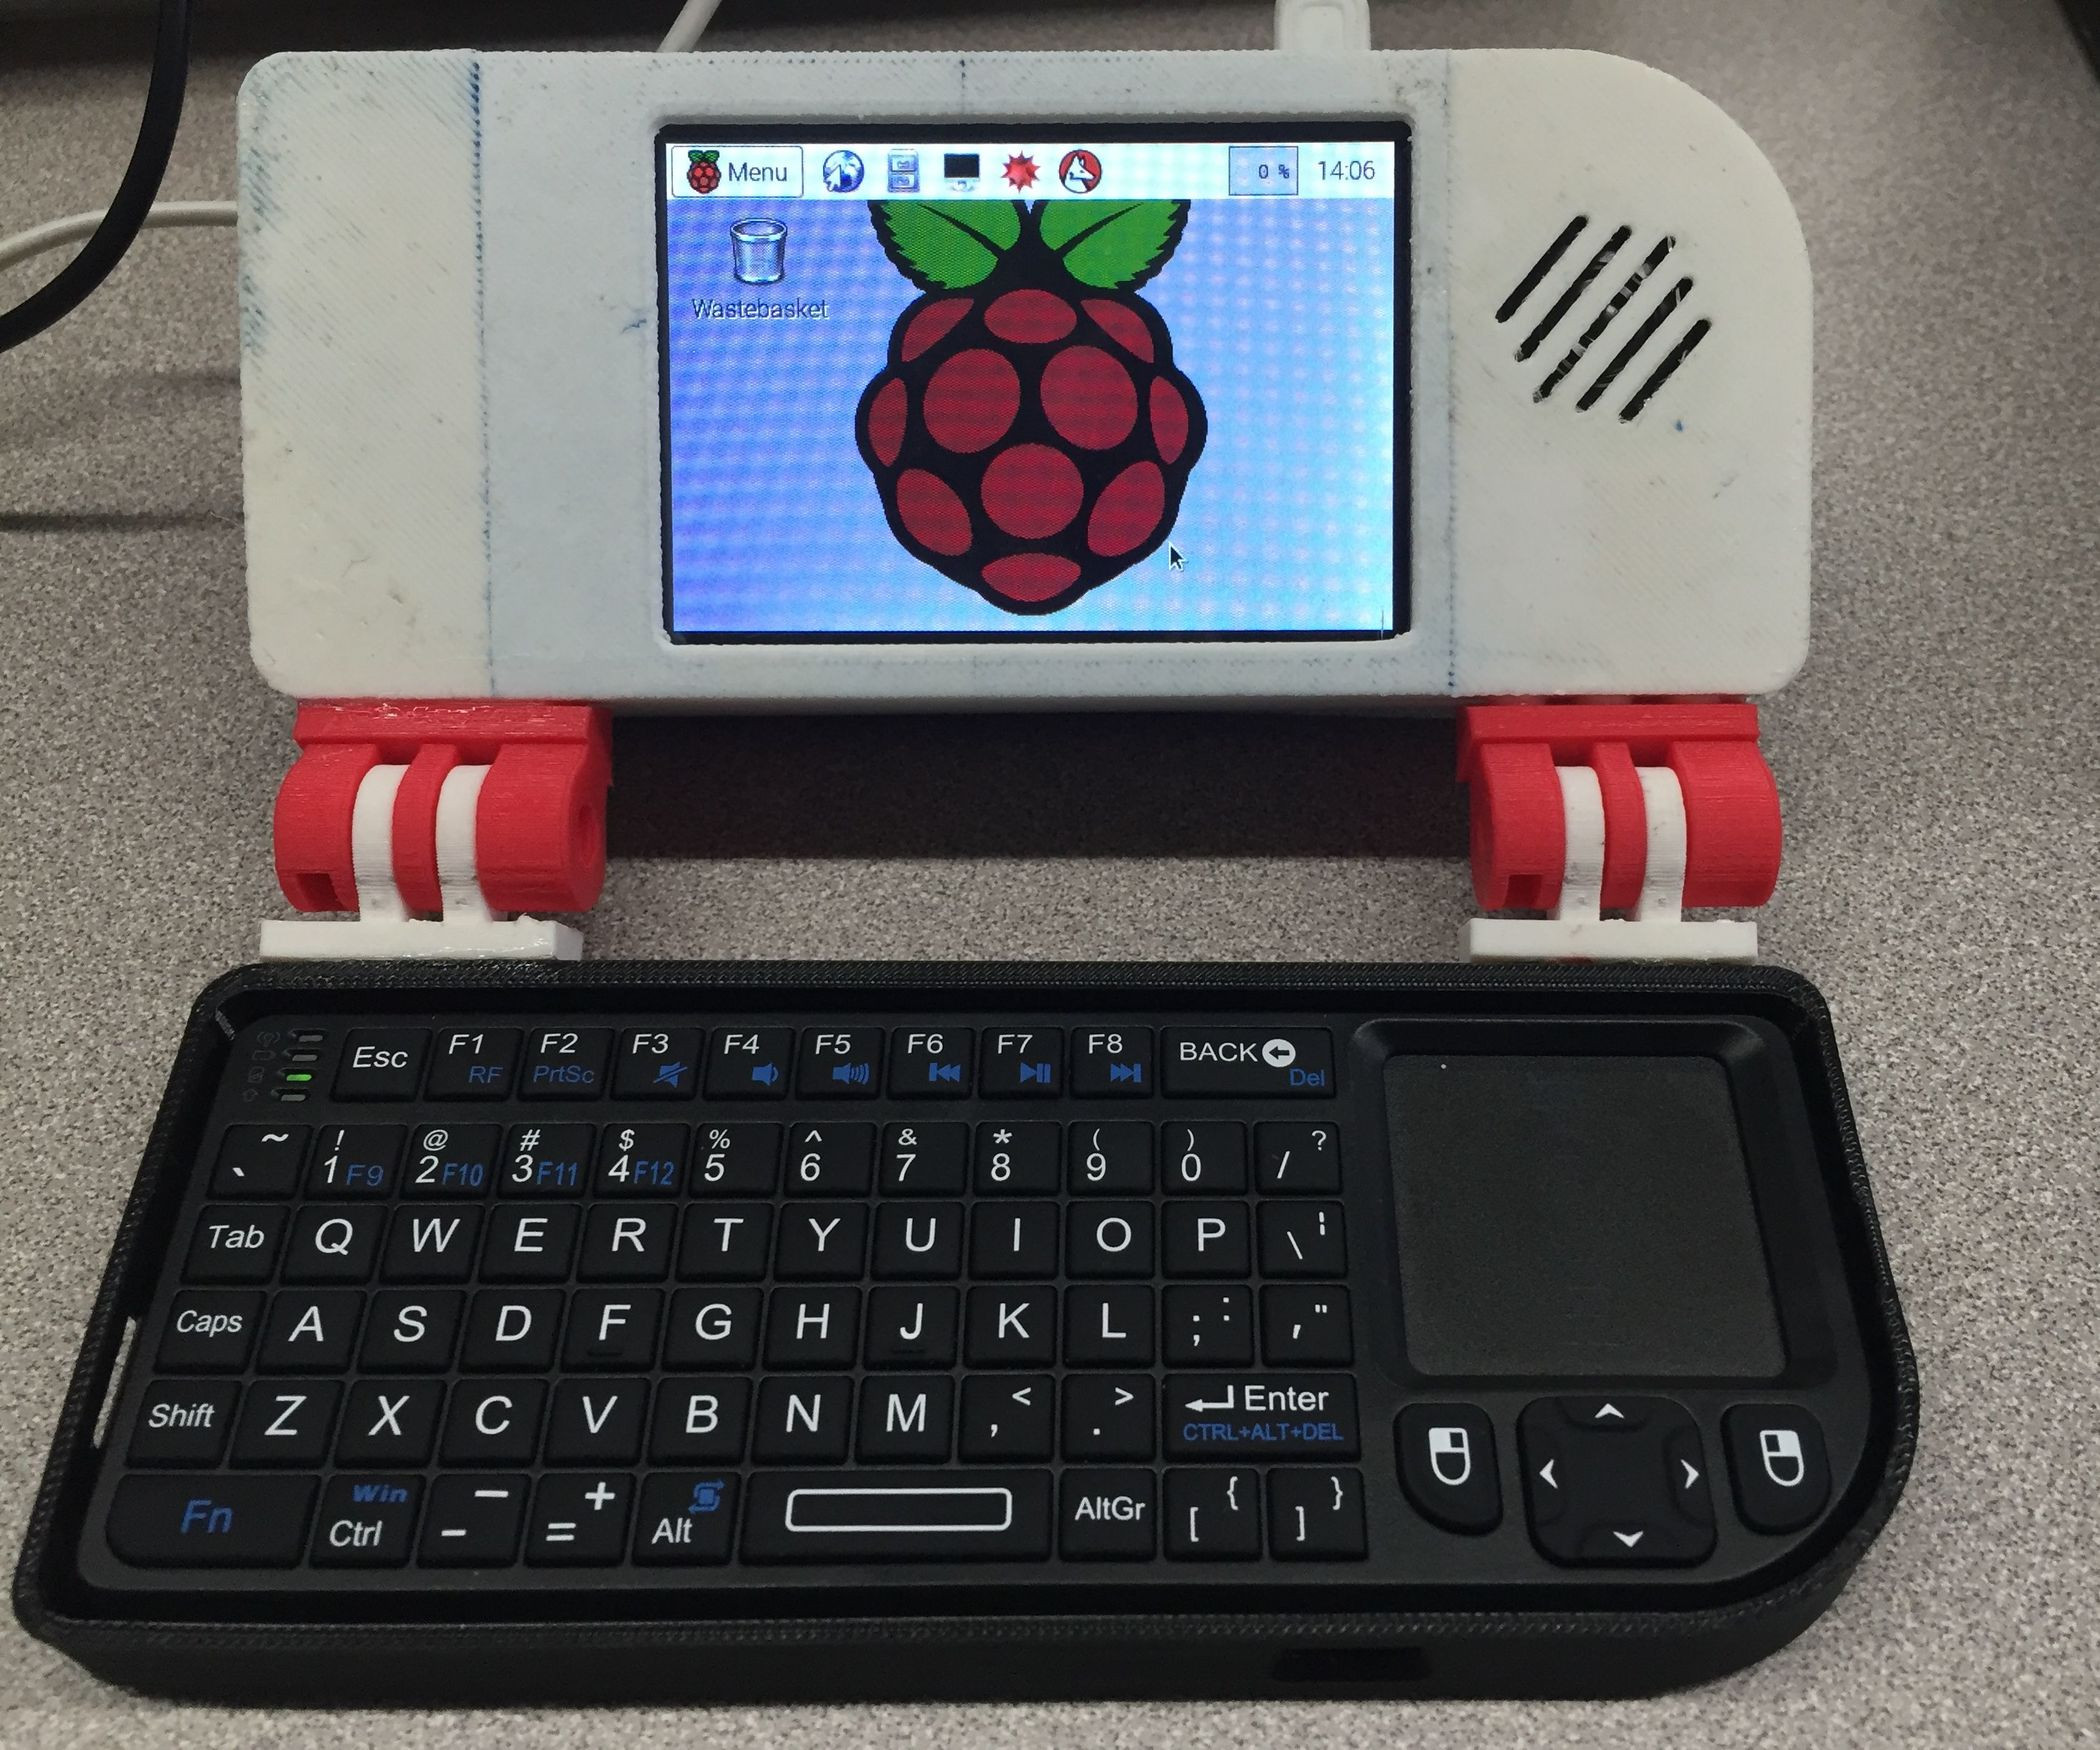 Best ideas about Raspberry Pi Laptop DIY
. Save or Pin Raspberry Pi Laptop DIY 2 Now.